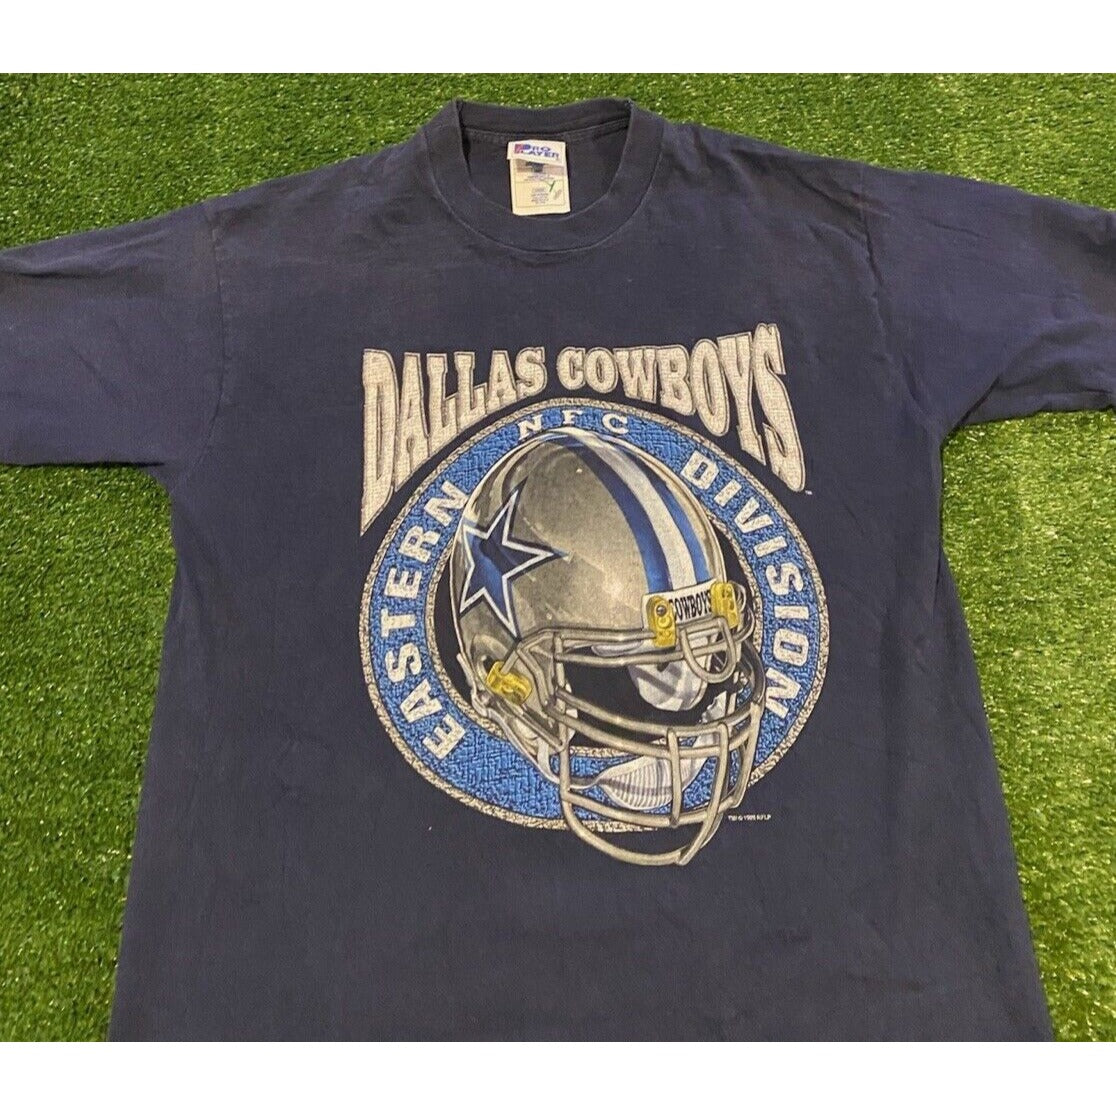 Vintage Dallas Cowboys shirt small blue Pro Player mens adult Emmitt Smith